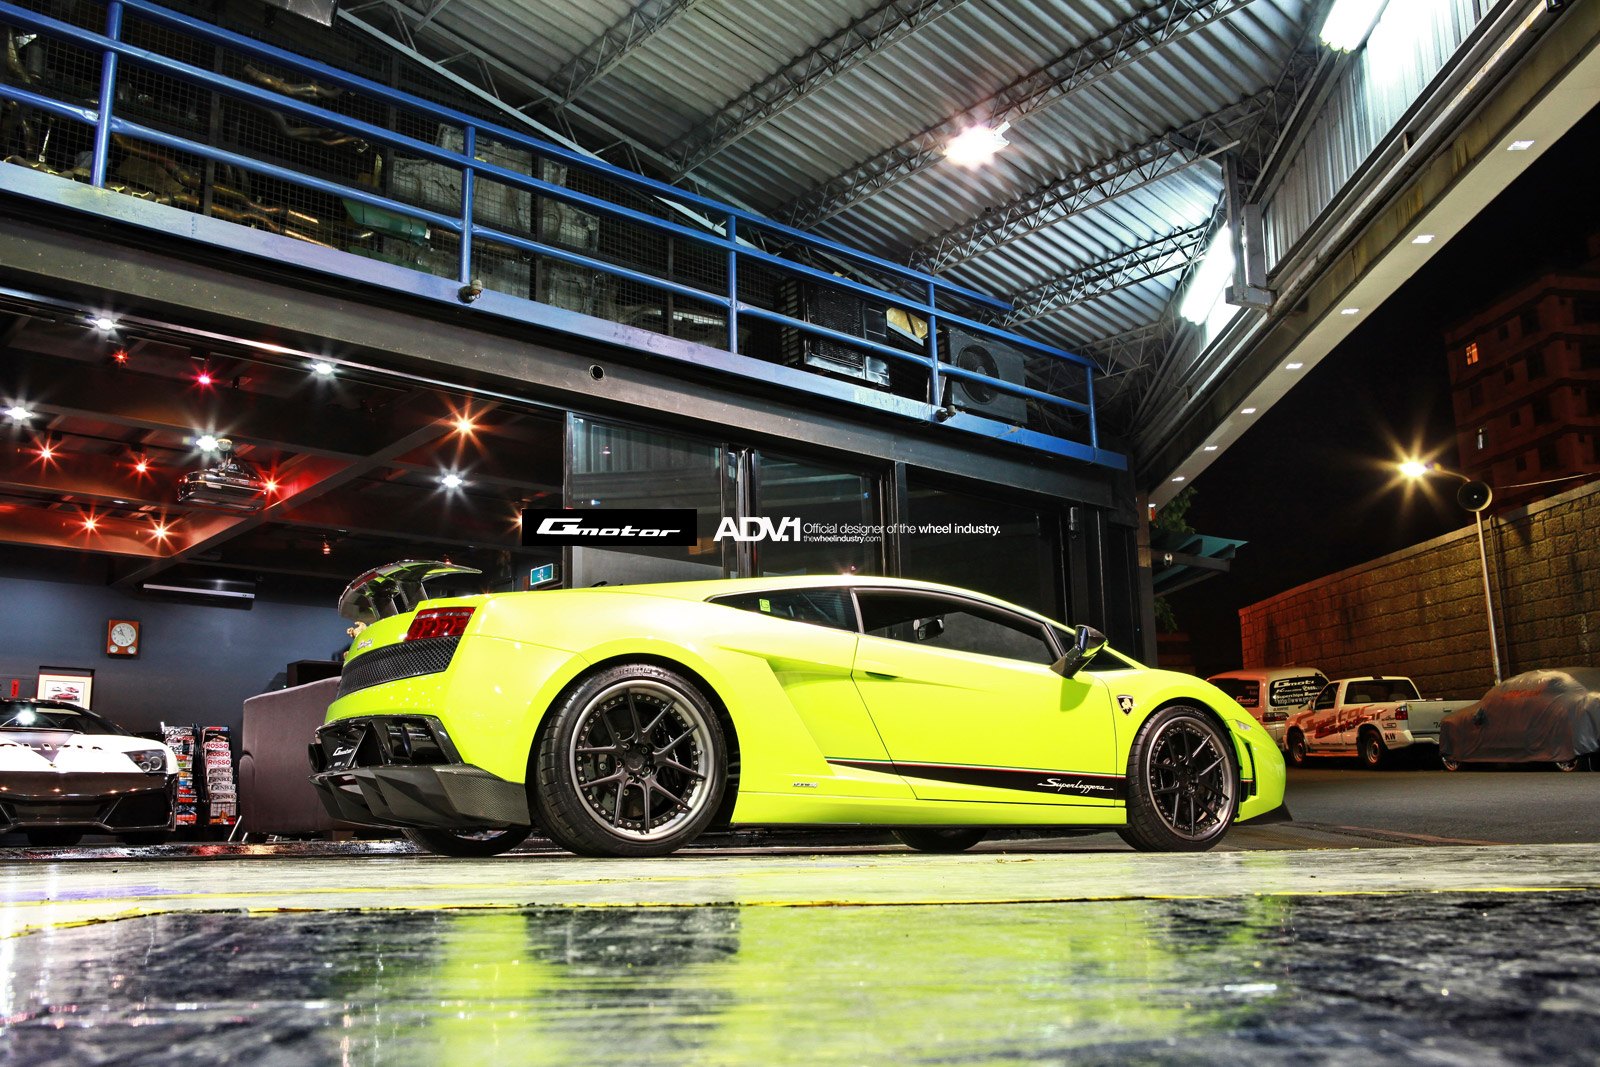 Large Wing Spoiler on Lime Green Lamborghini Gallardo - Photo by ADV.1